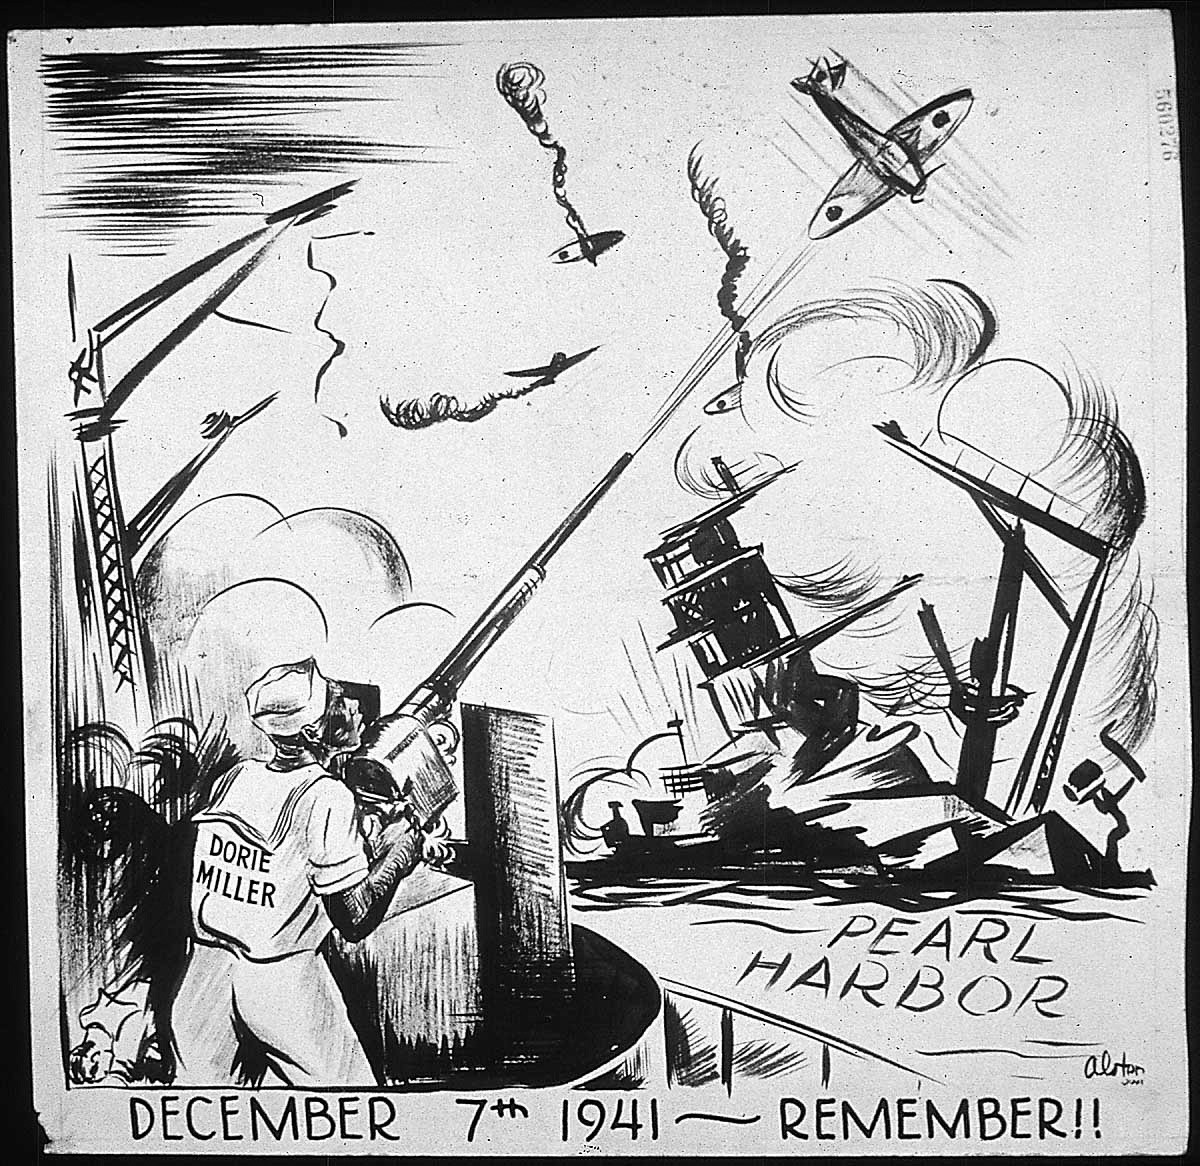 December 7th 1941—Remember!!